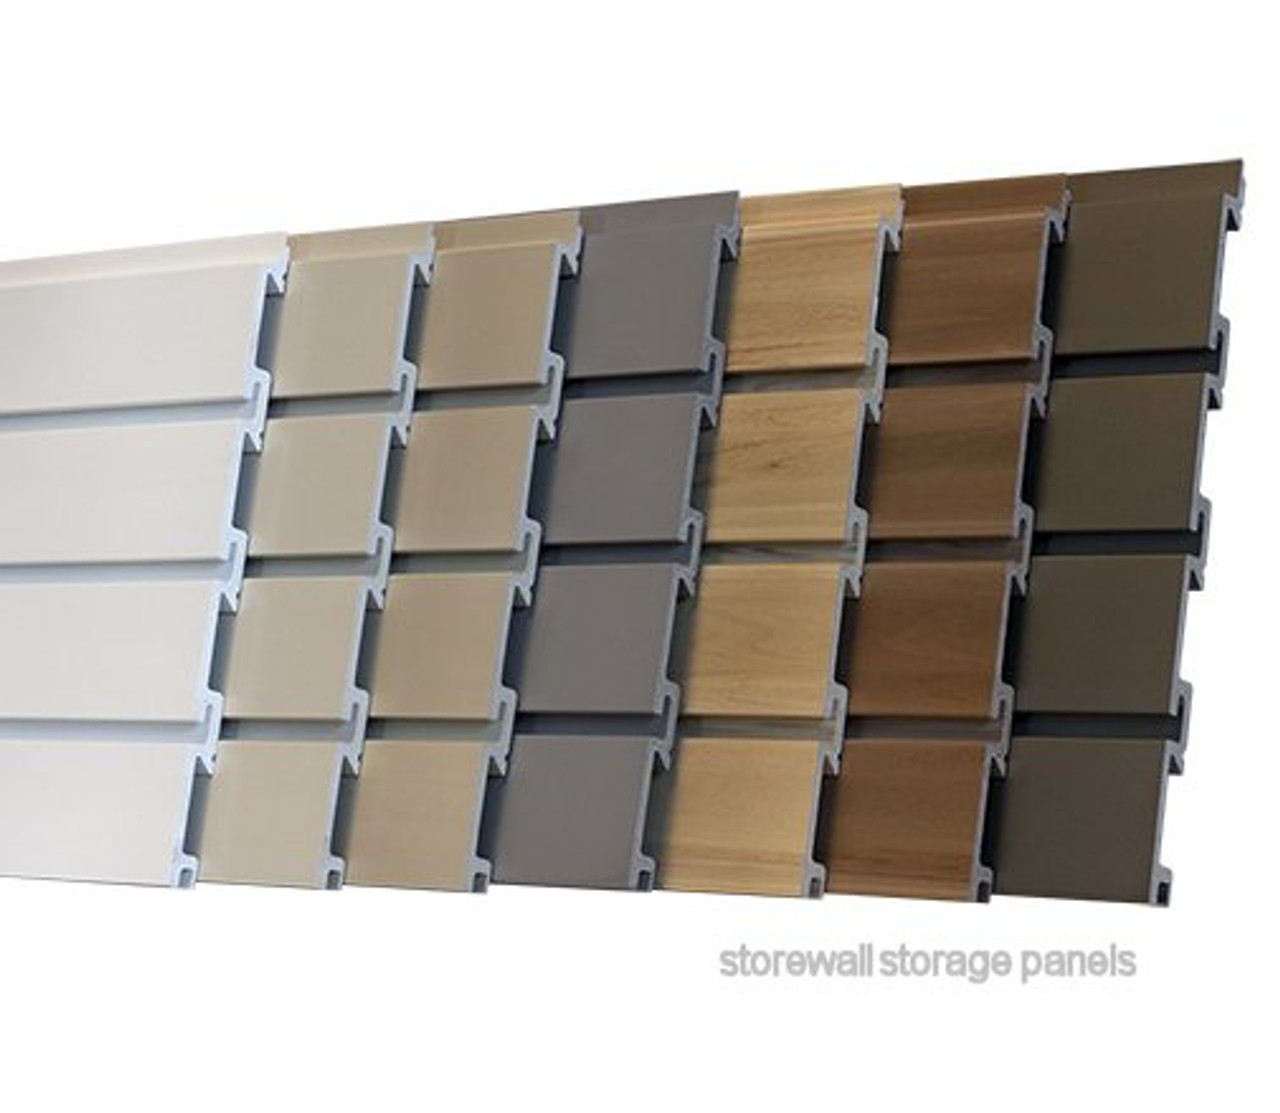 StoreWall Standard Panels